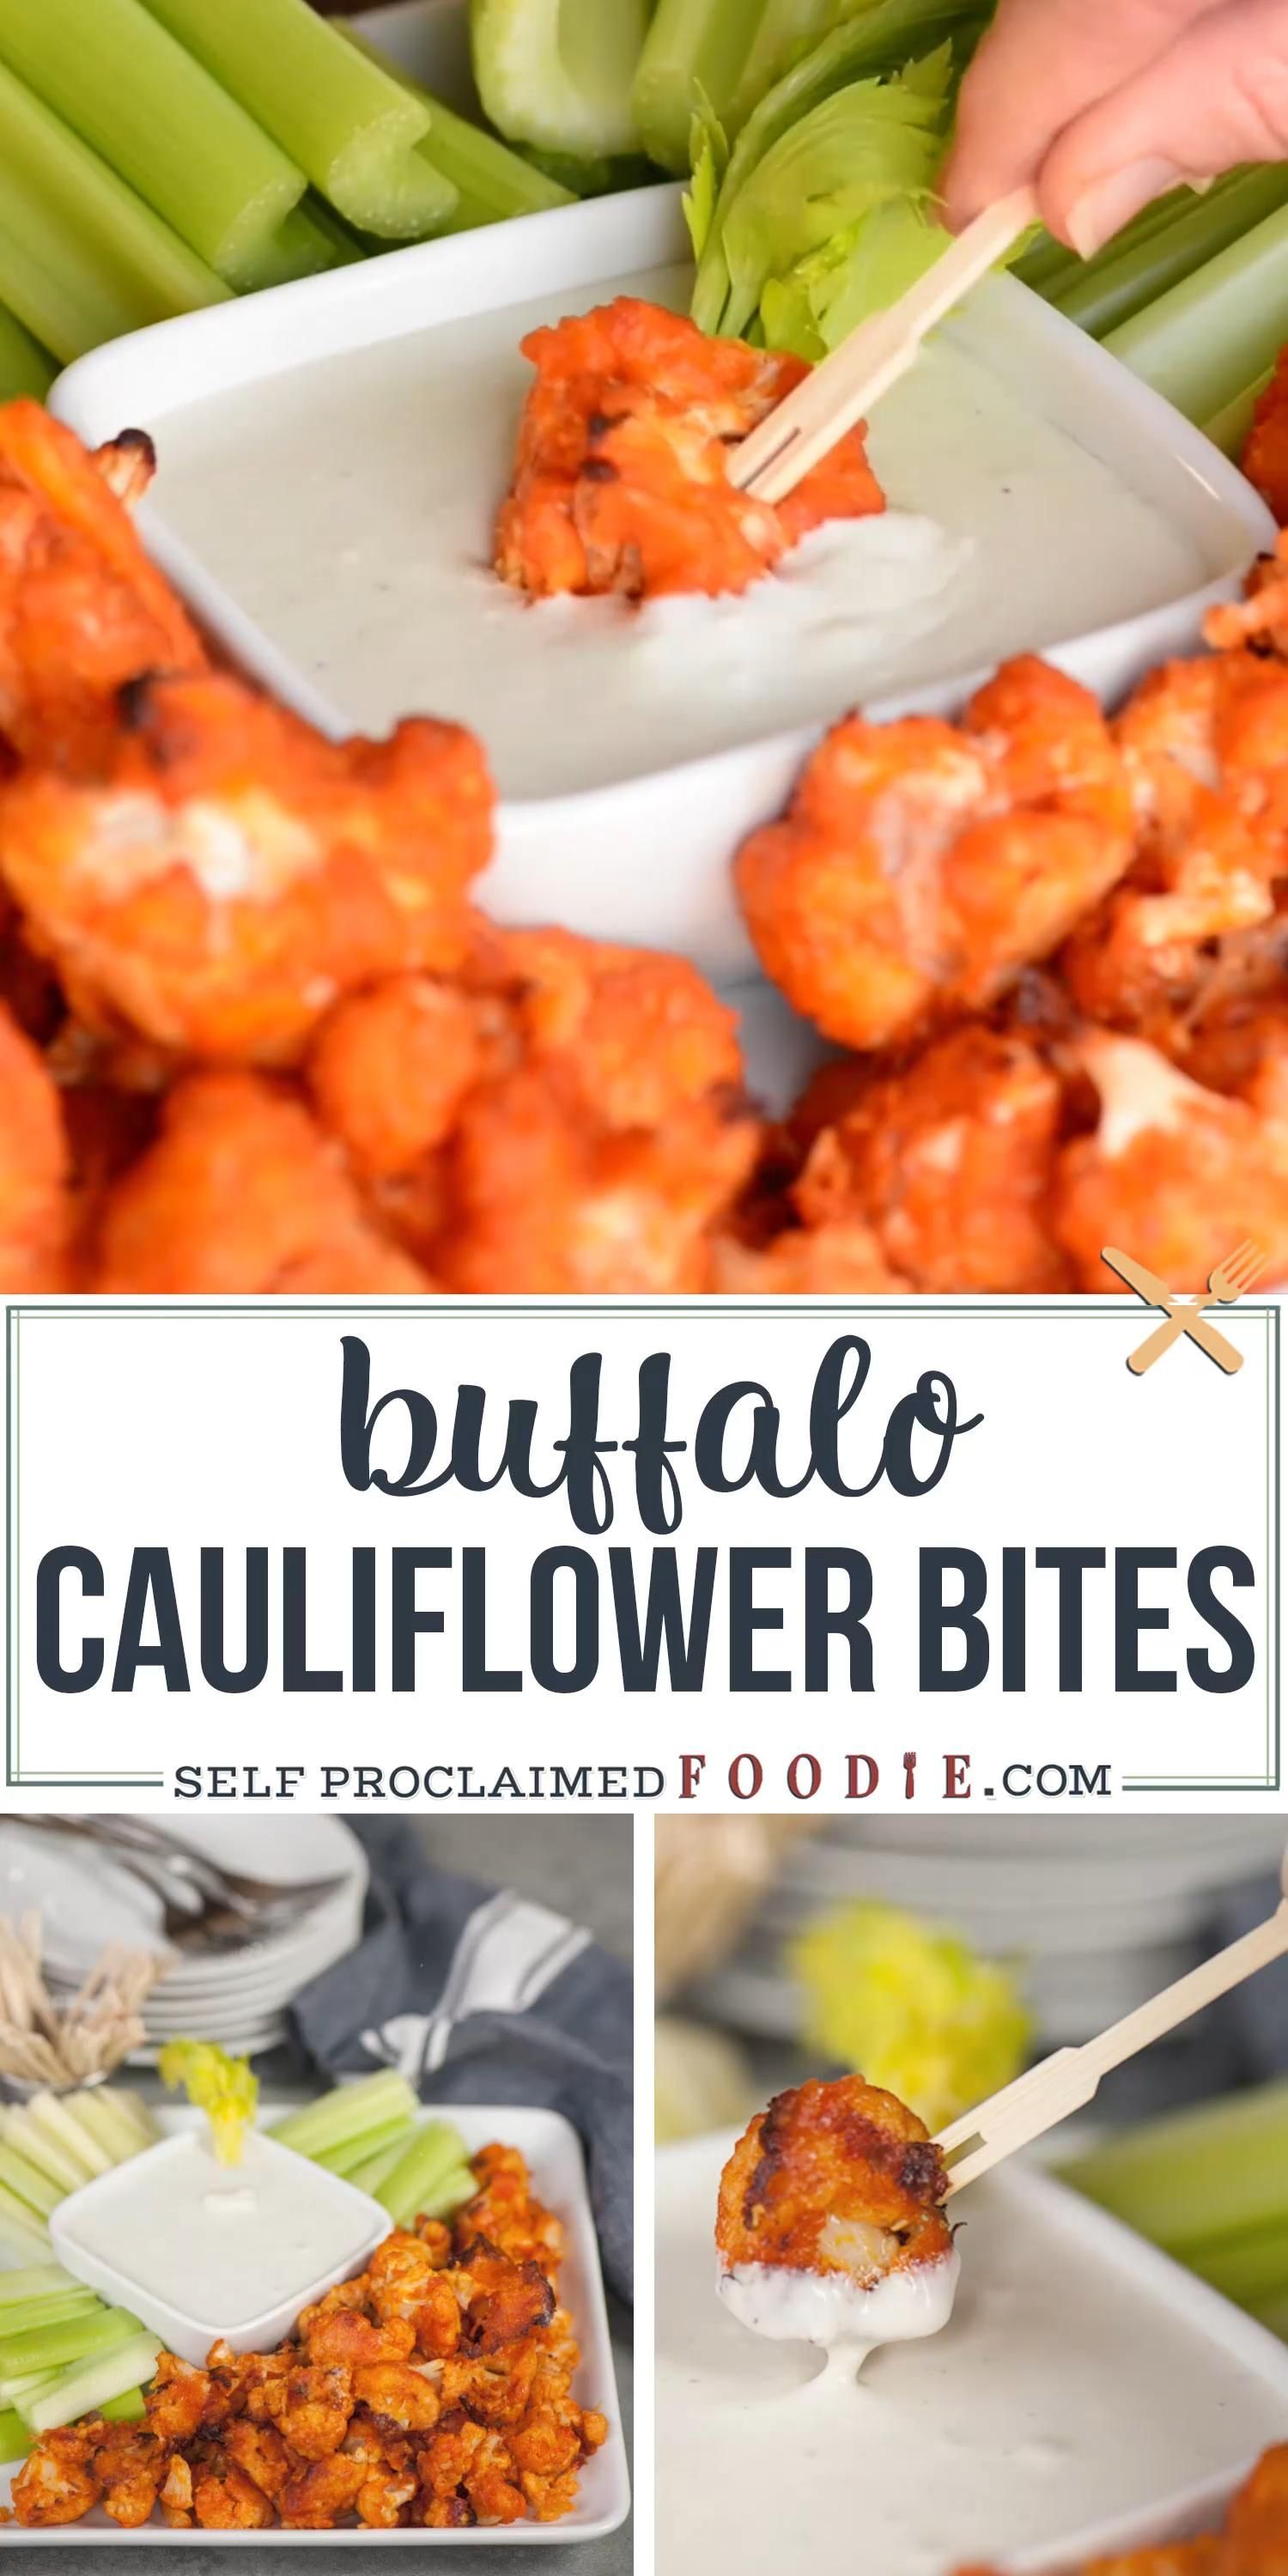 17 healthy recipes Cauliflower vegans ideas